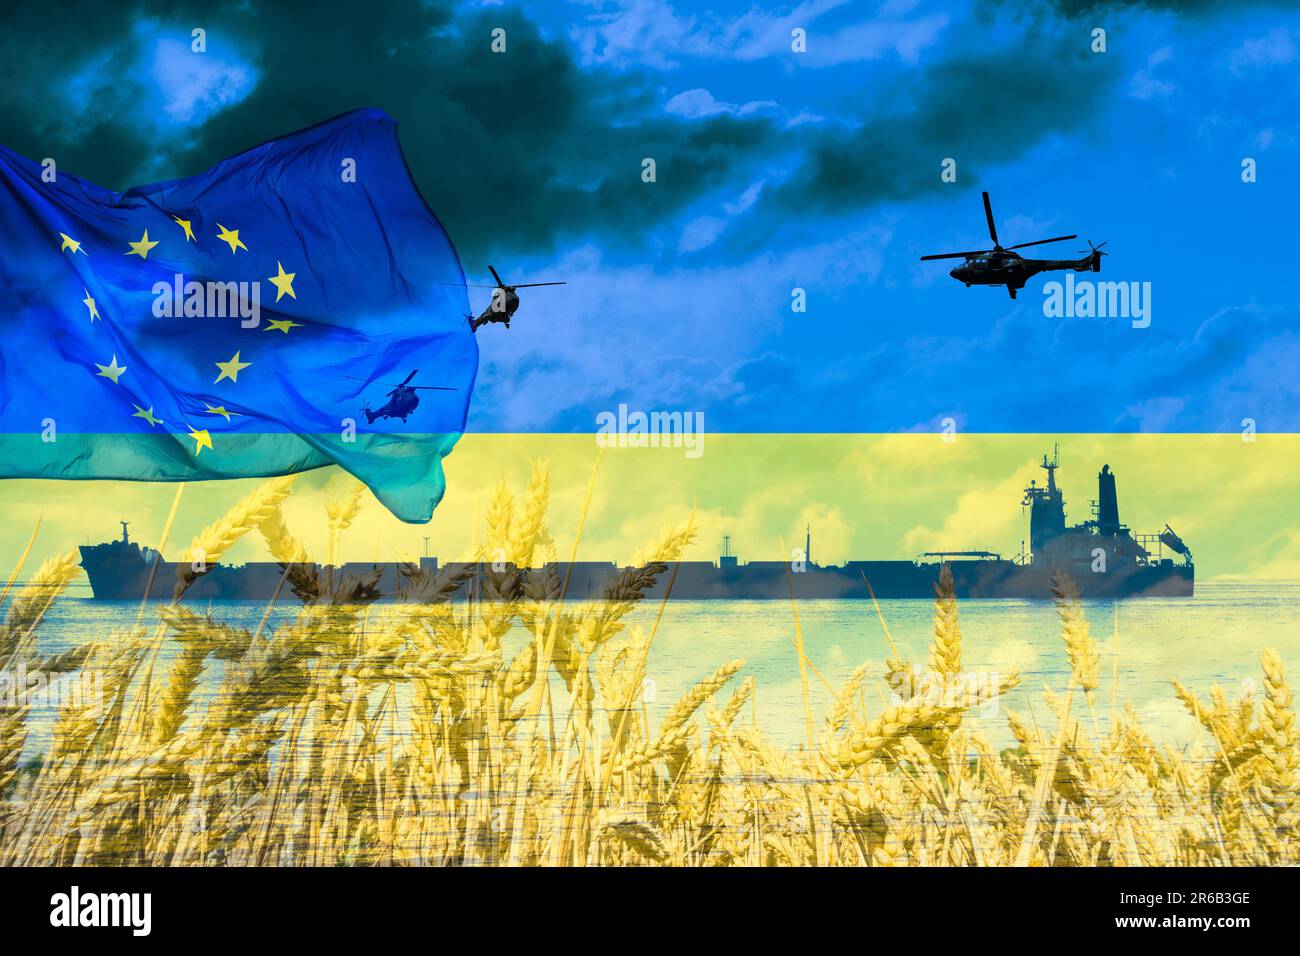 EU, European Union flag over grain ship Ukraine flag. Ukraine, Russia war, world food prices, wheat prices, EU ban...concept Stock Photo